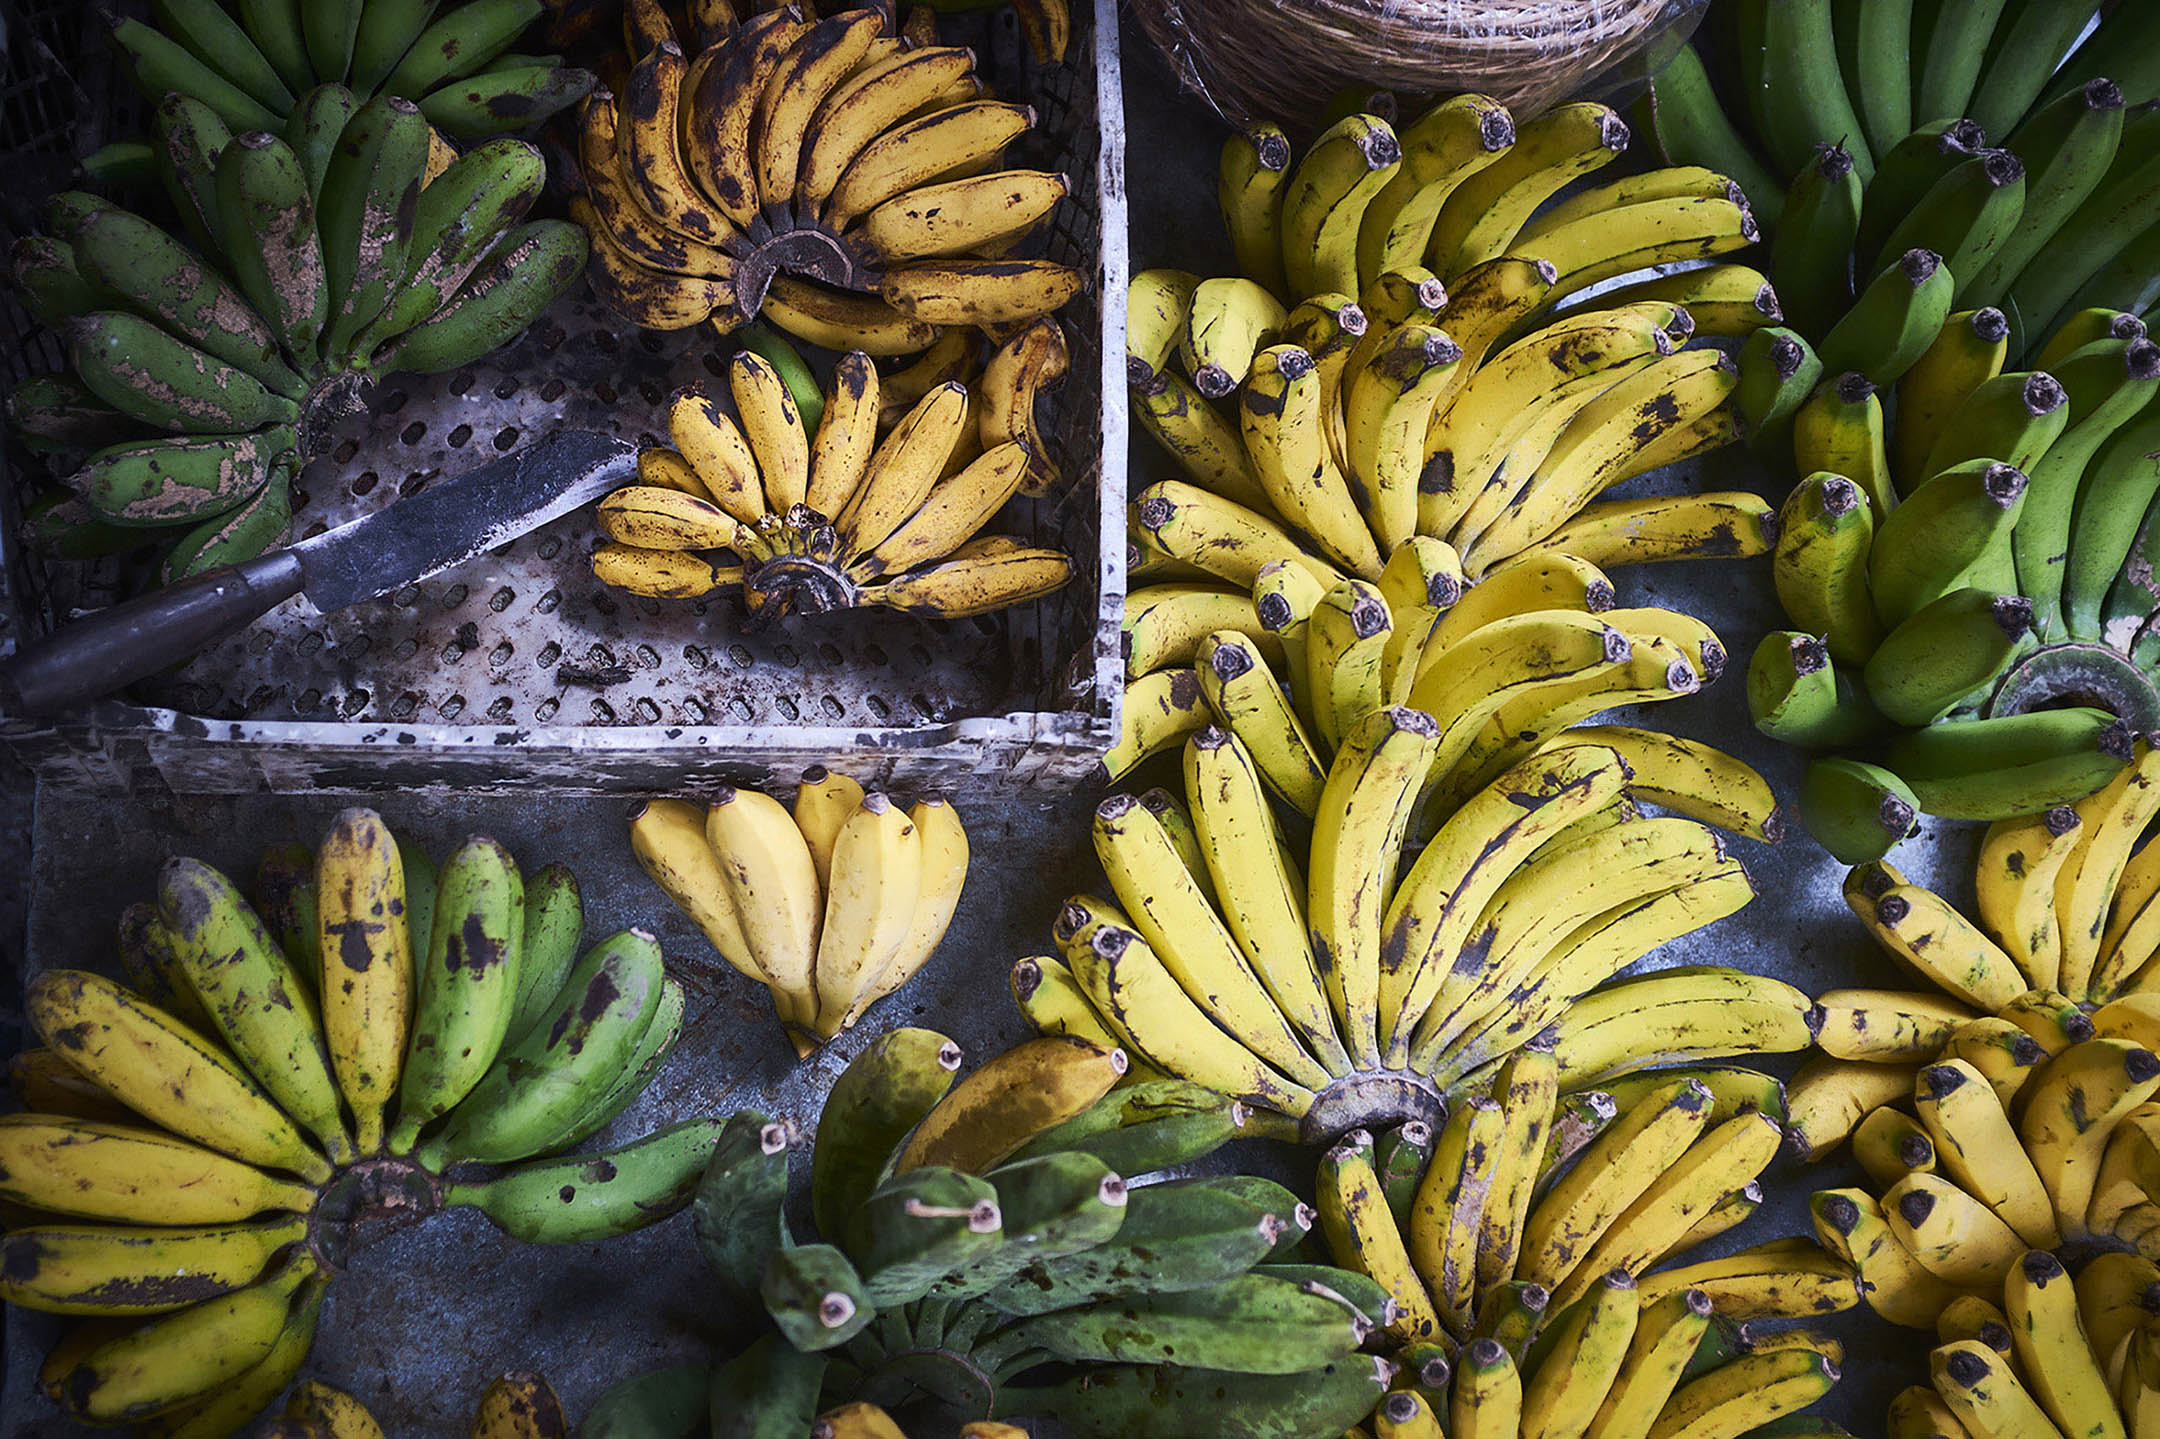 SteveRyan_Photographer_Ingredients_Produce_Vegetables_Bananas_17